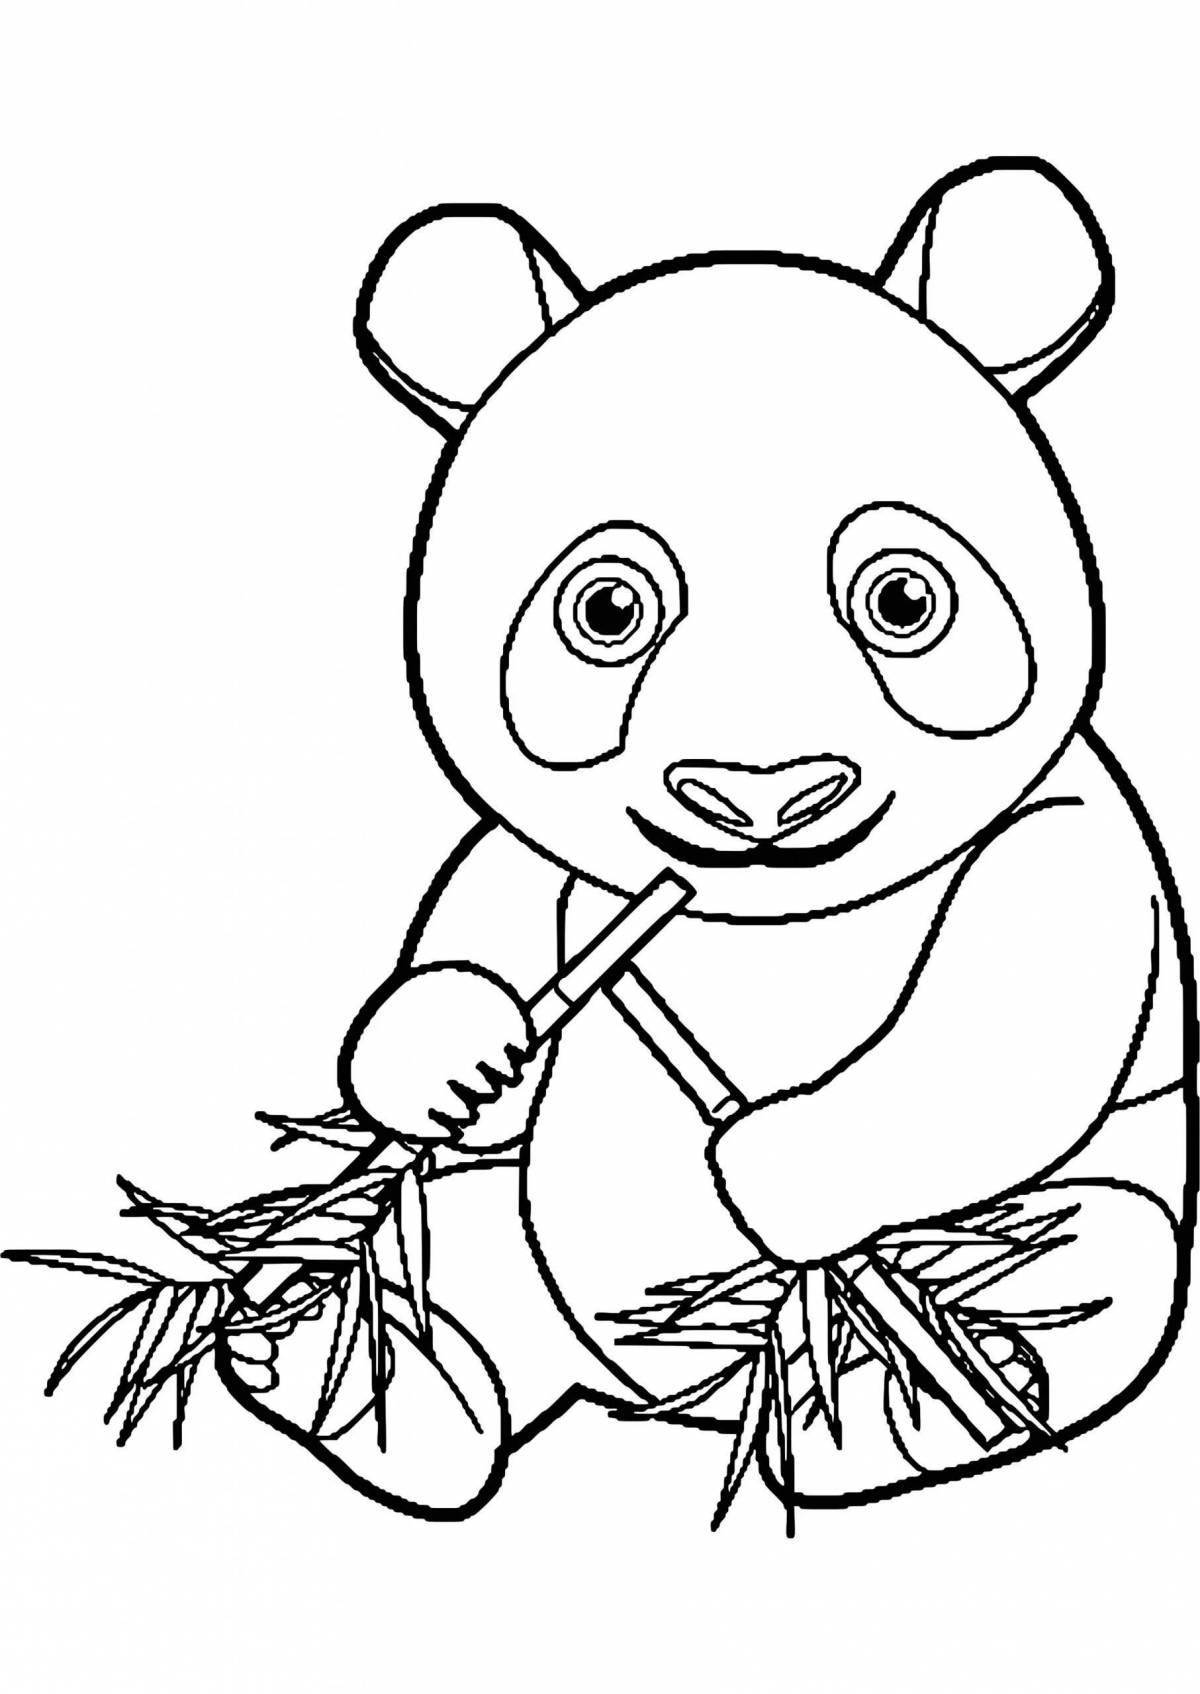 Adorable panda coloring book for kids